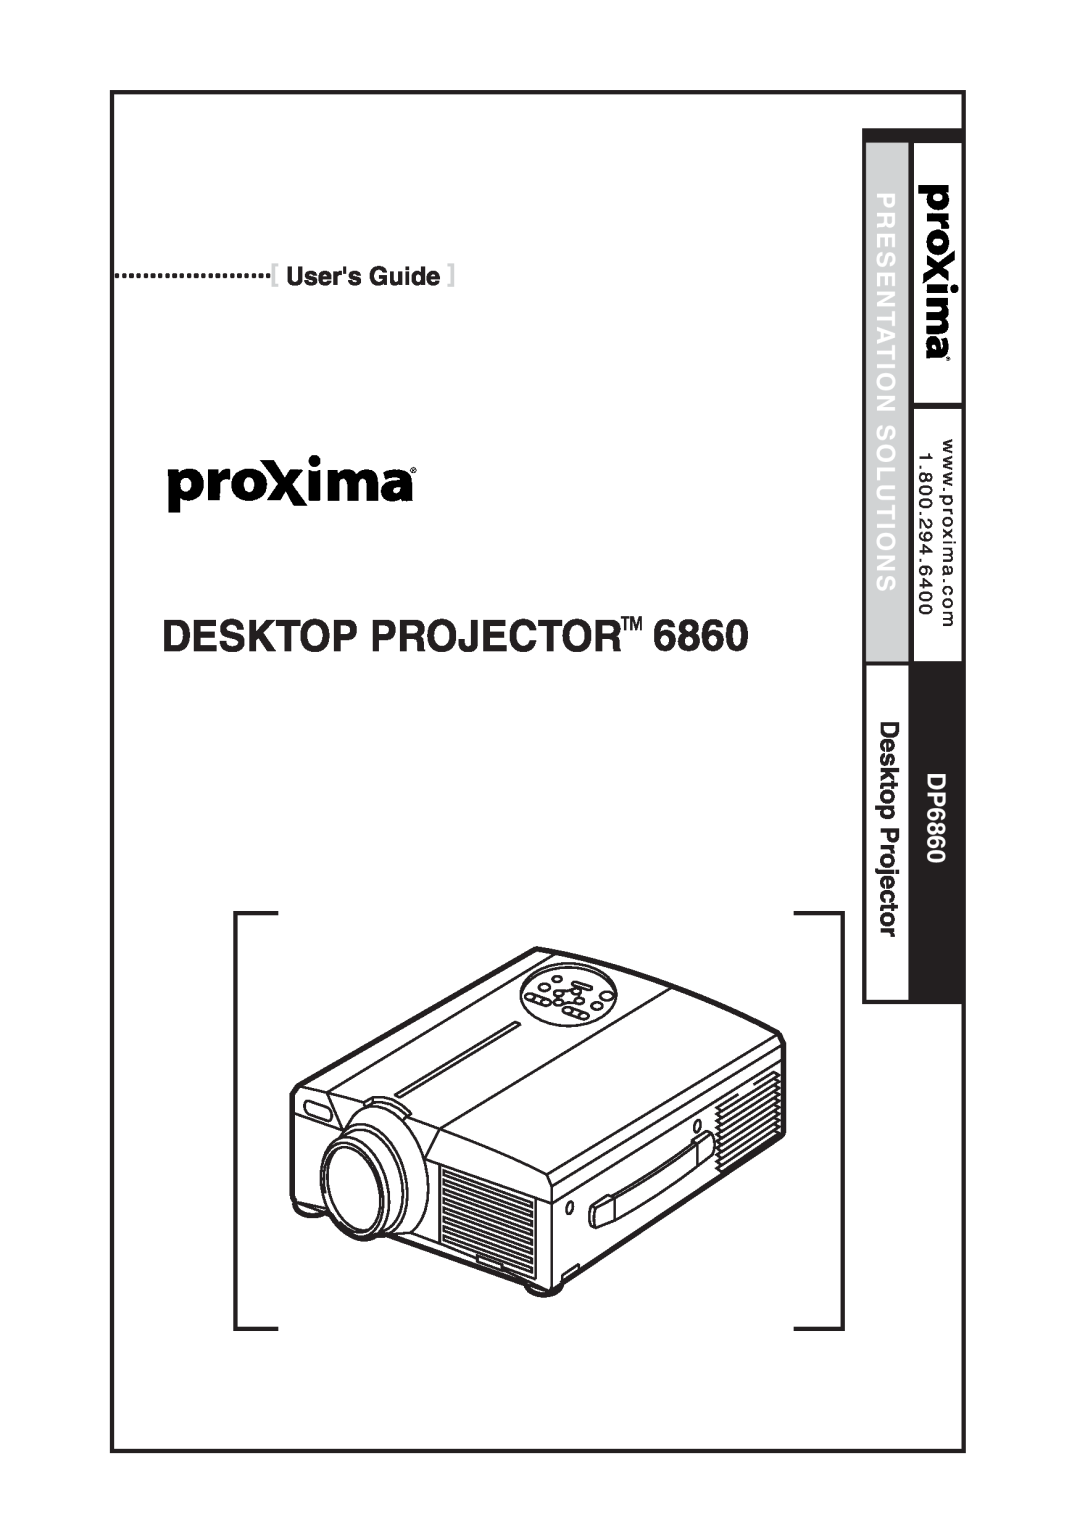 InFocus liquid crystal user manual DP6860, Presentation Solutions, Desktop Projector, 1 . 8 0 0 . 2 9 4 . 6 4 0 